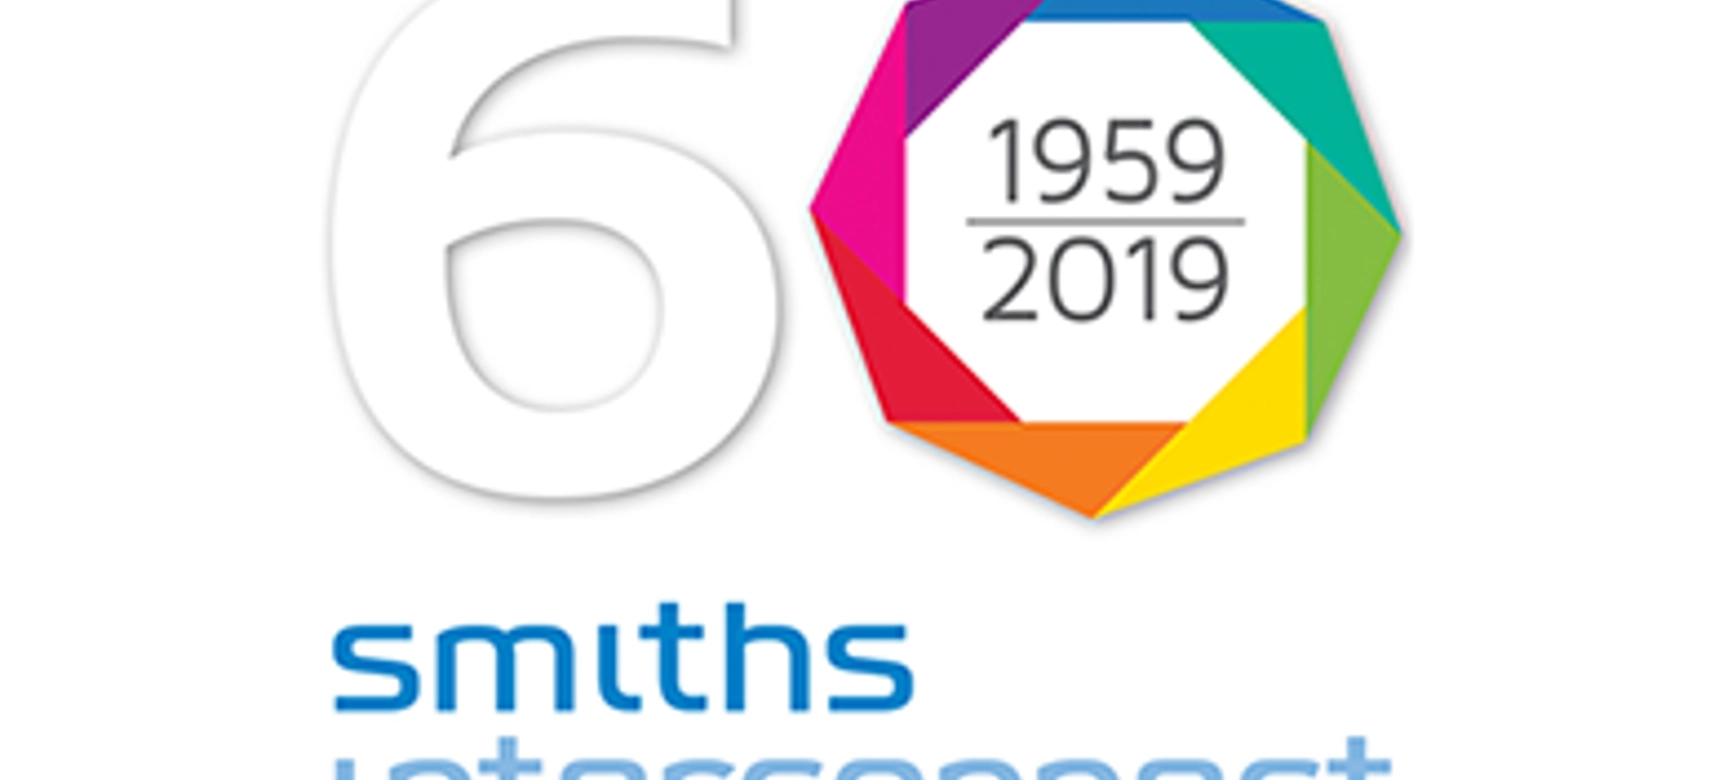 Smiths Interconnect 60th celebration